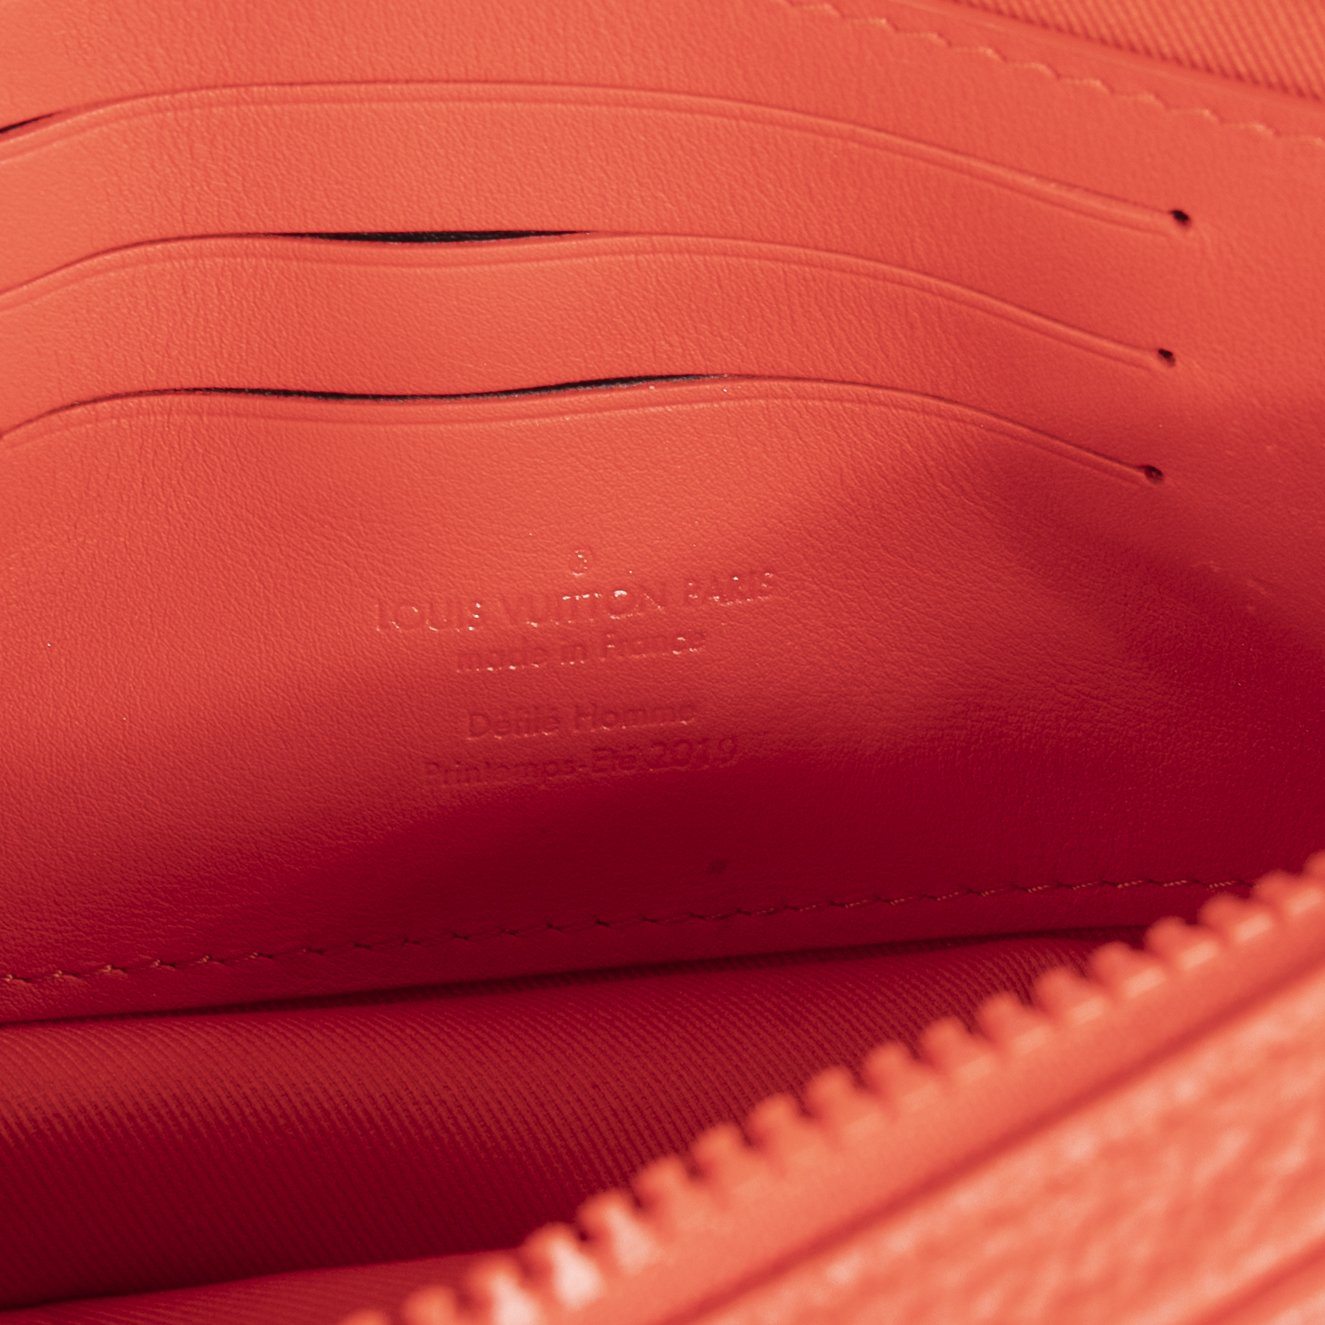 Louis Vuitton Pochette Volga Monogram Rouge in Taurillon Leather